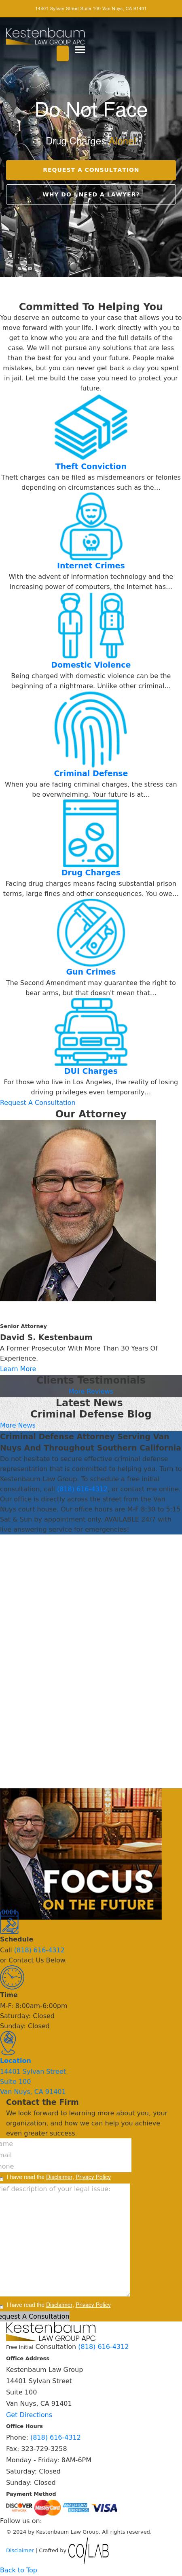 Kestenbaum Law Group - Van Nuys CA Lawyers